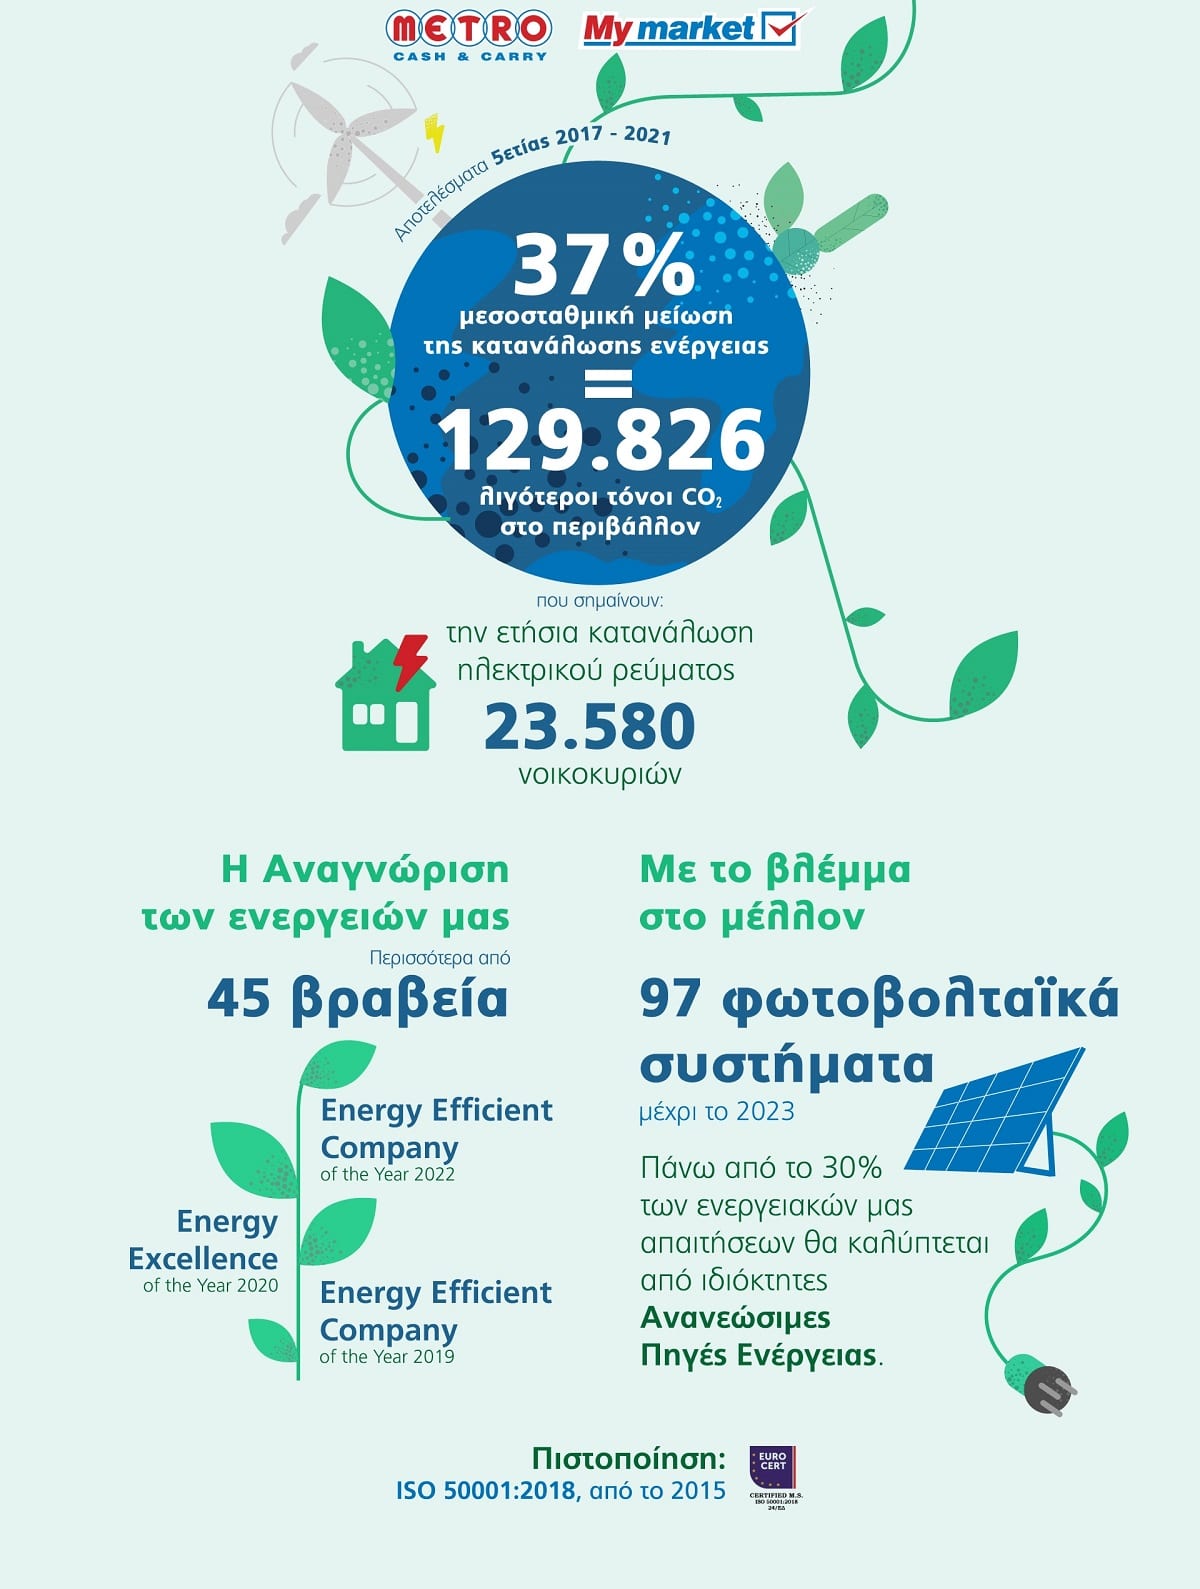 METRO ΑΕΒΕ: Μακροπρόθεσμη δέσμευση στην προστασία του Περιβάλλοντος με σημαντικές επενδύσεις και πρωτοβουλίες